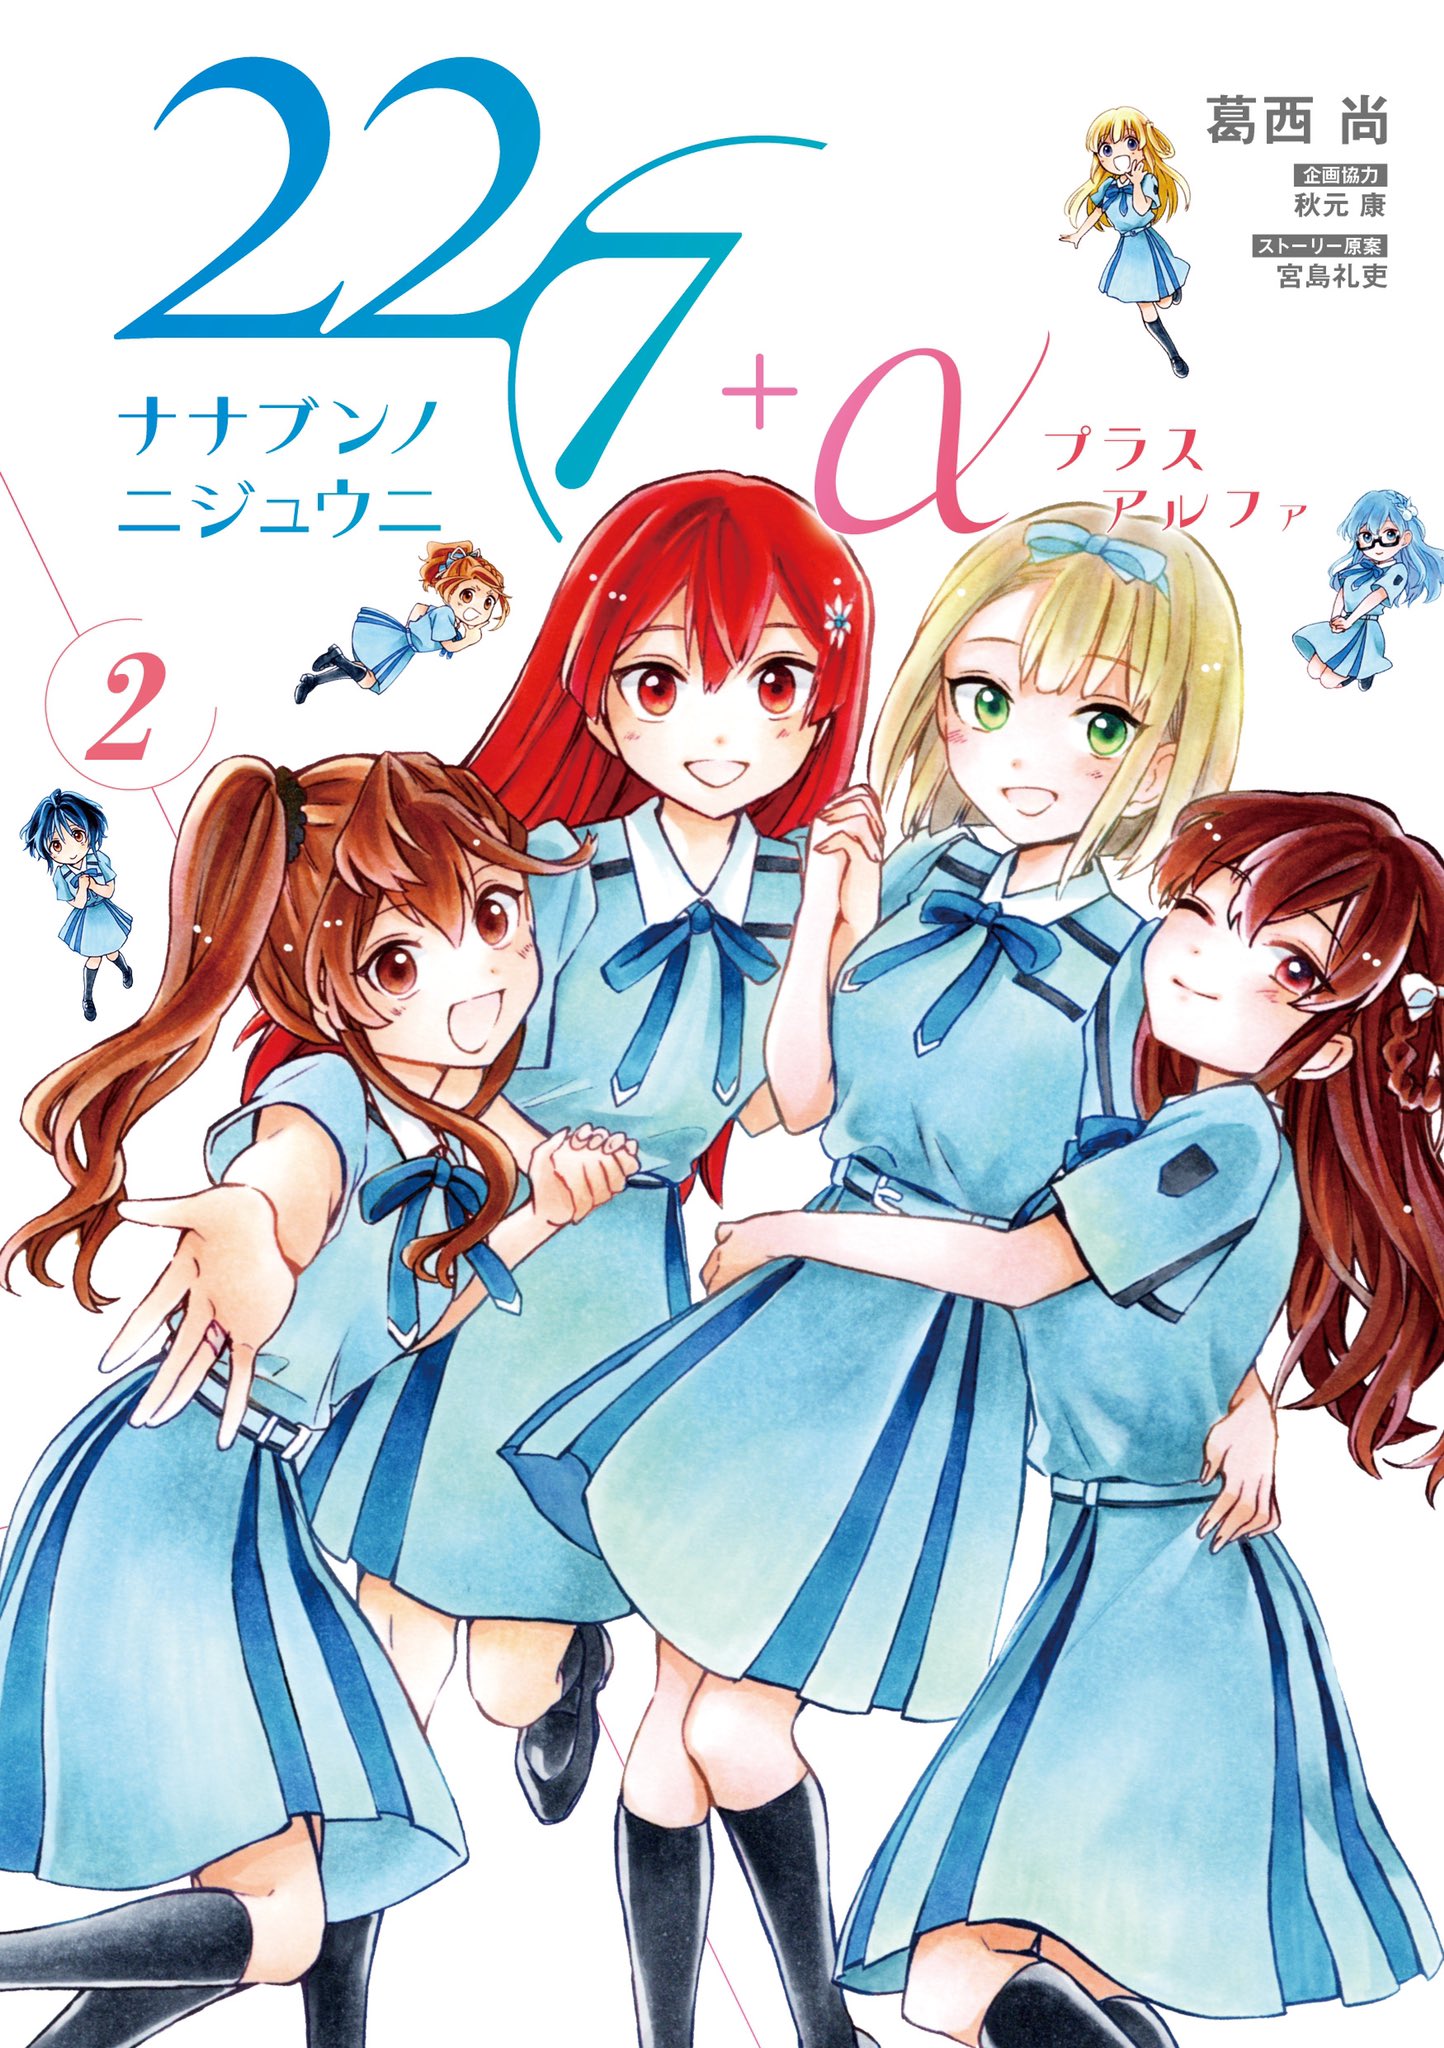 [22/7] Acrylic Clip Miu & Sakura (Anime Toy) - HobbySearch Anime Goods Store